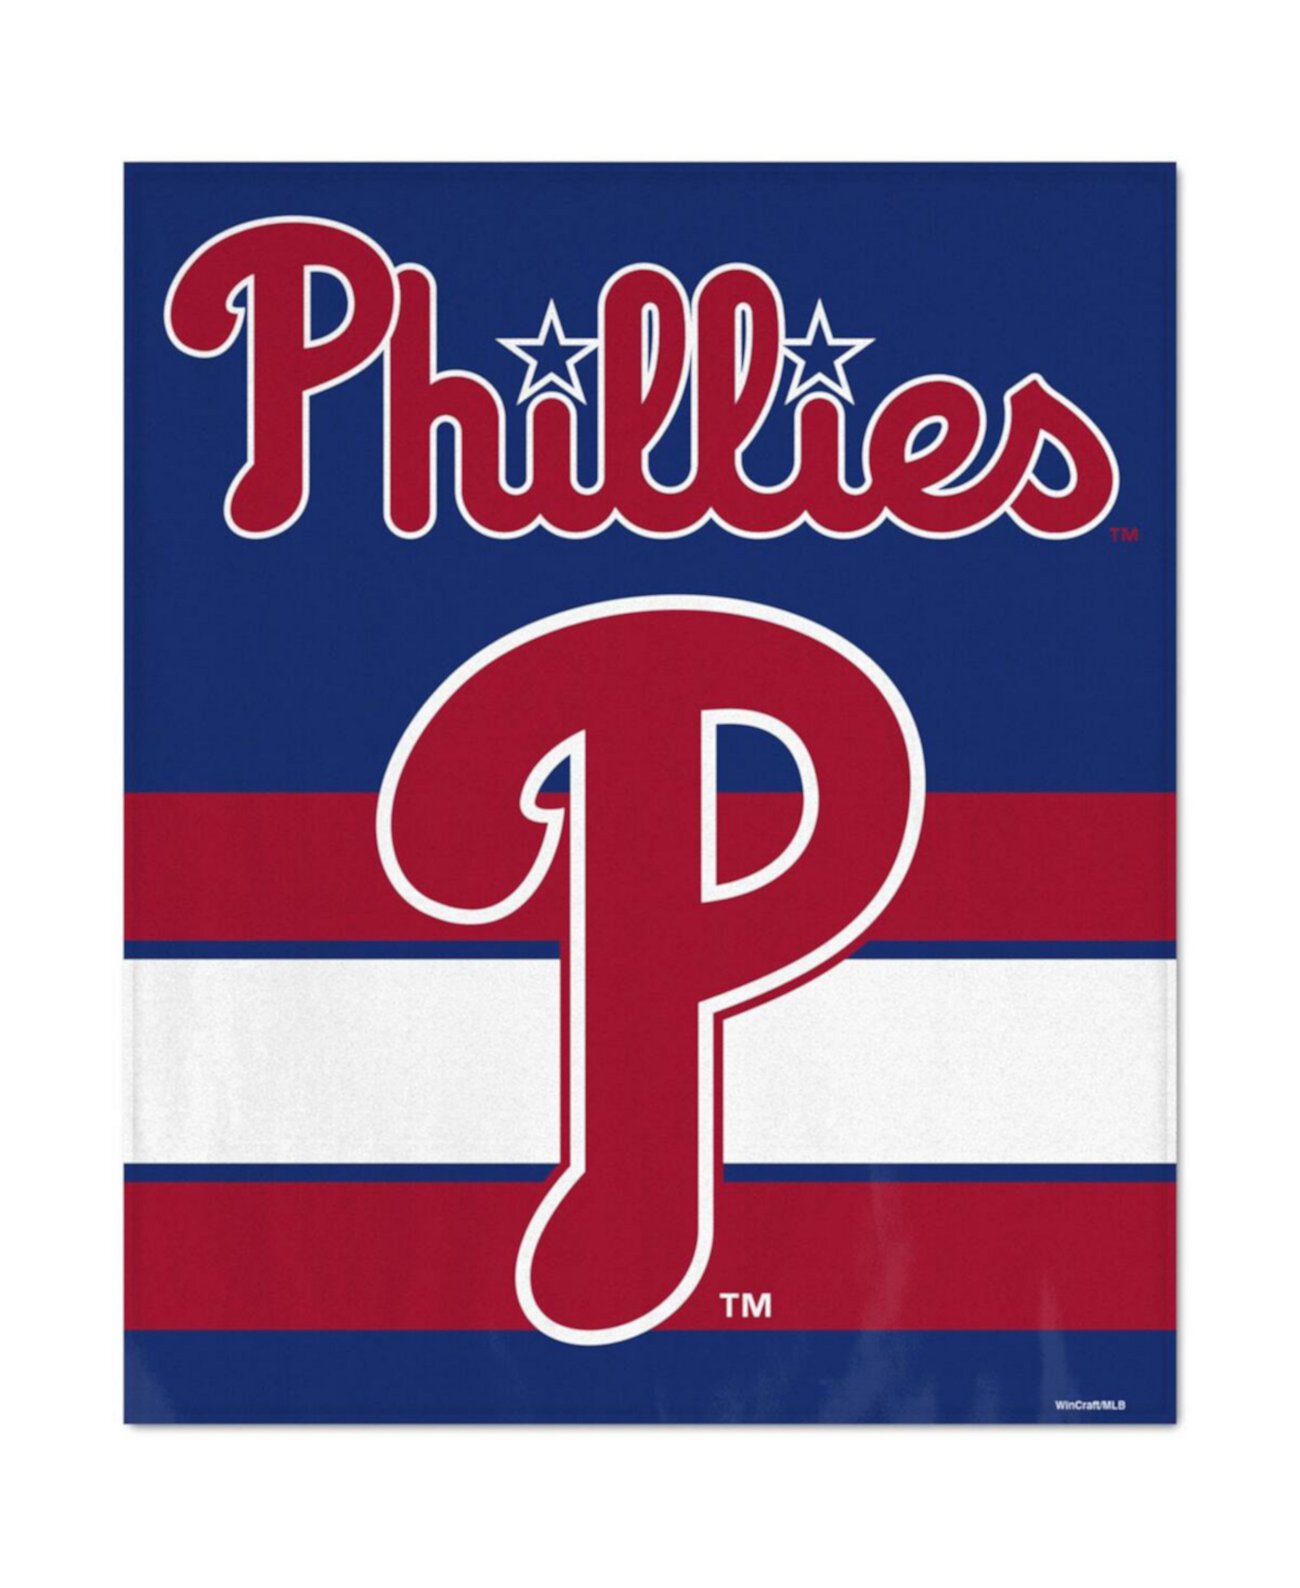 Плед Philadelphia Phillies Ultra Plush размером 50 x 60 дюймов Wincraft